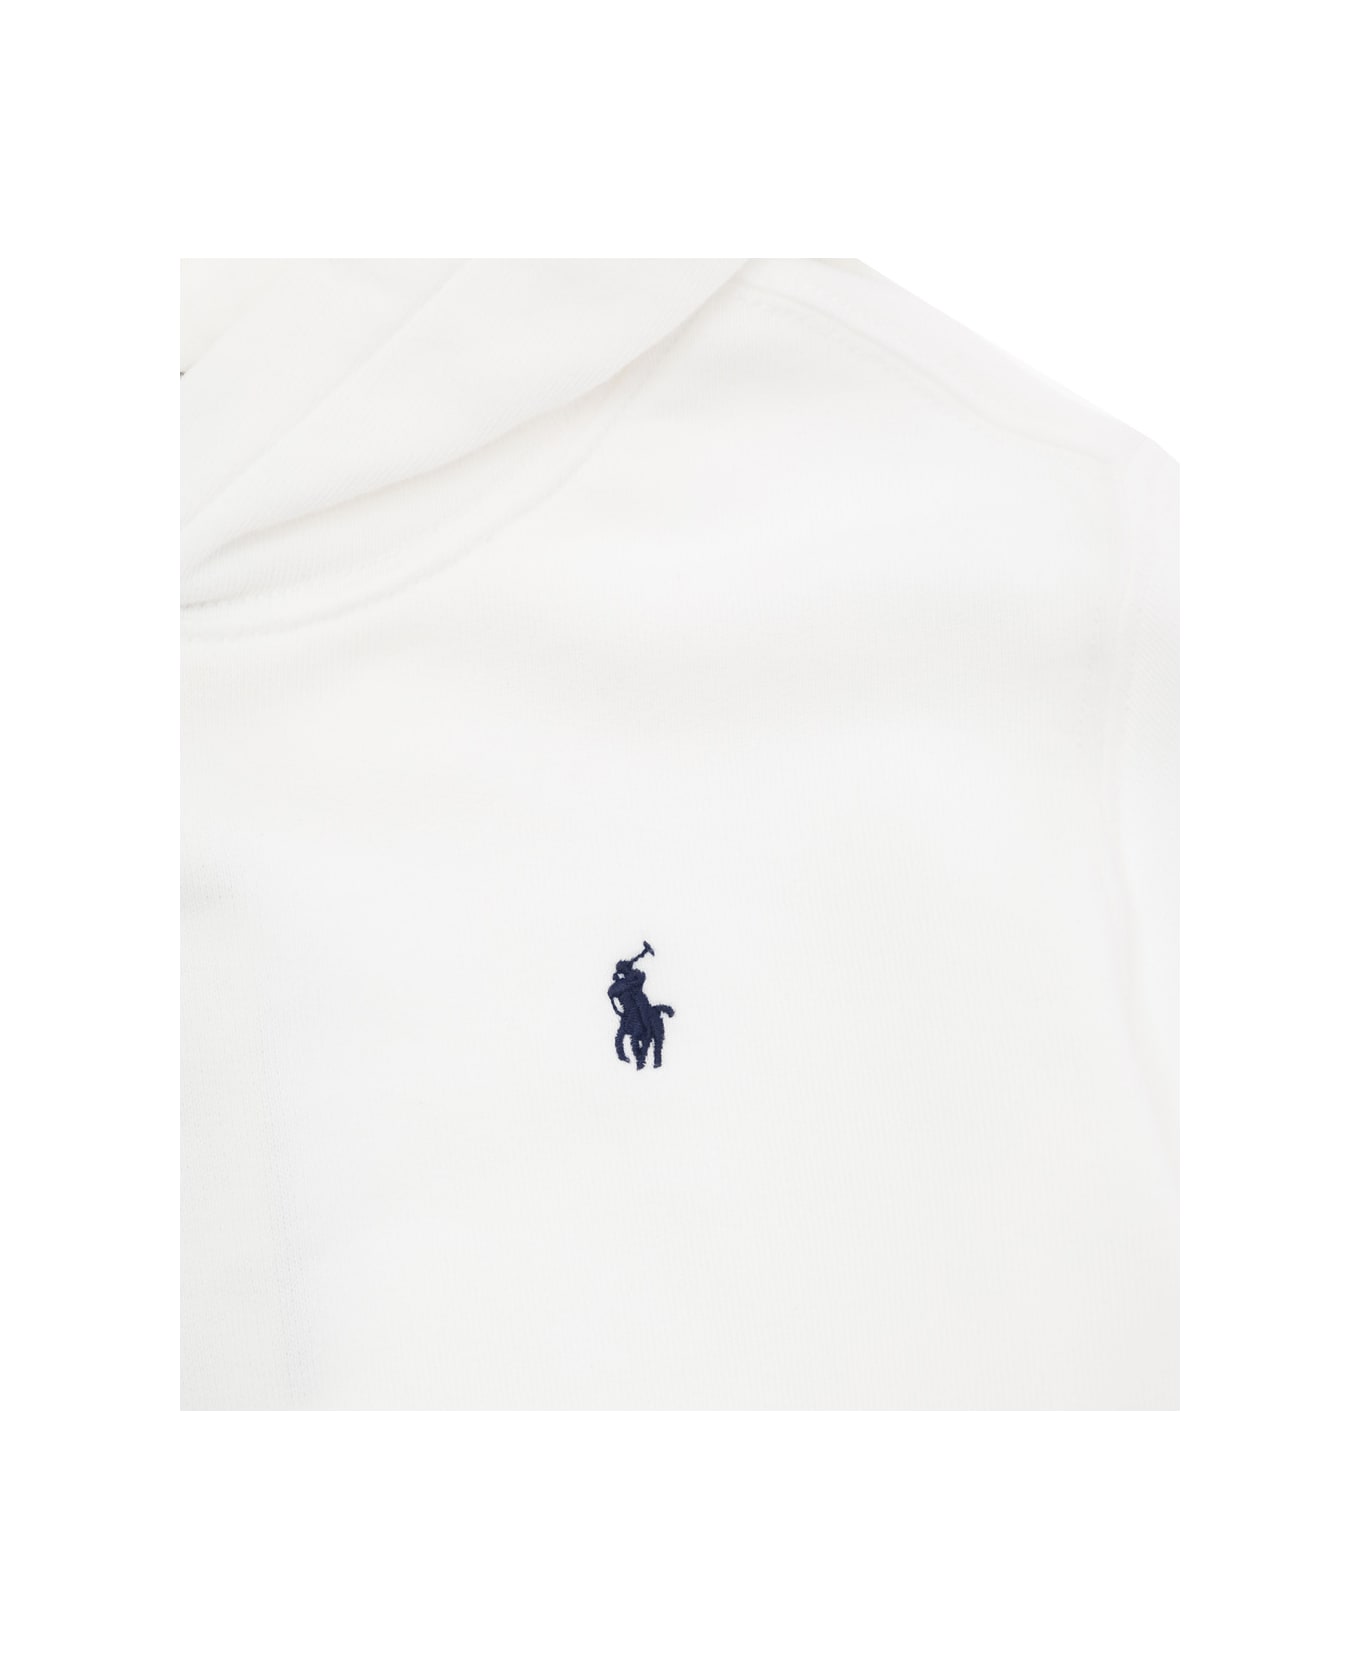 Polo Ralph Lauren White Front Logo Hoodie In Cotton Blend Boy - White